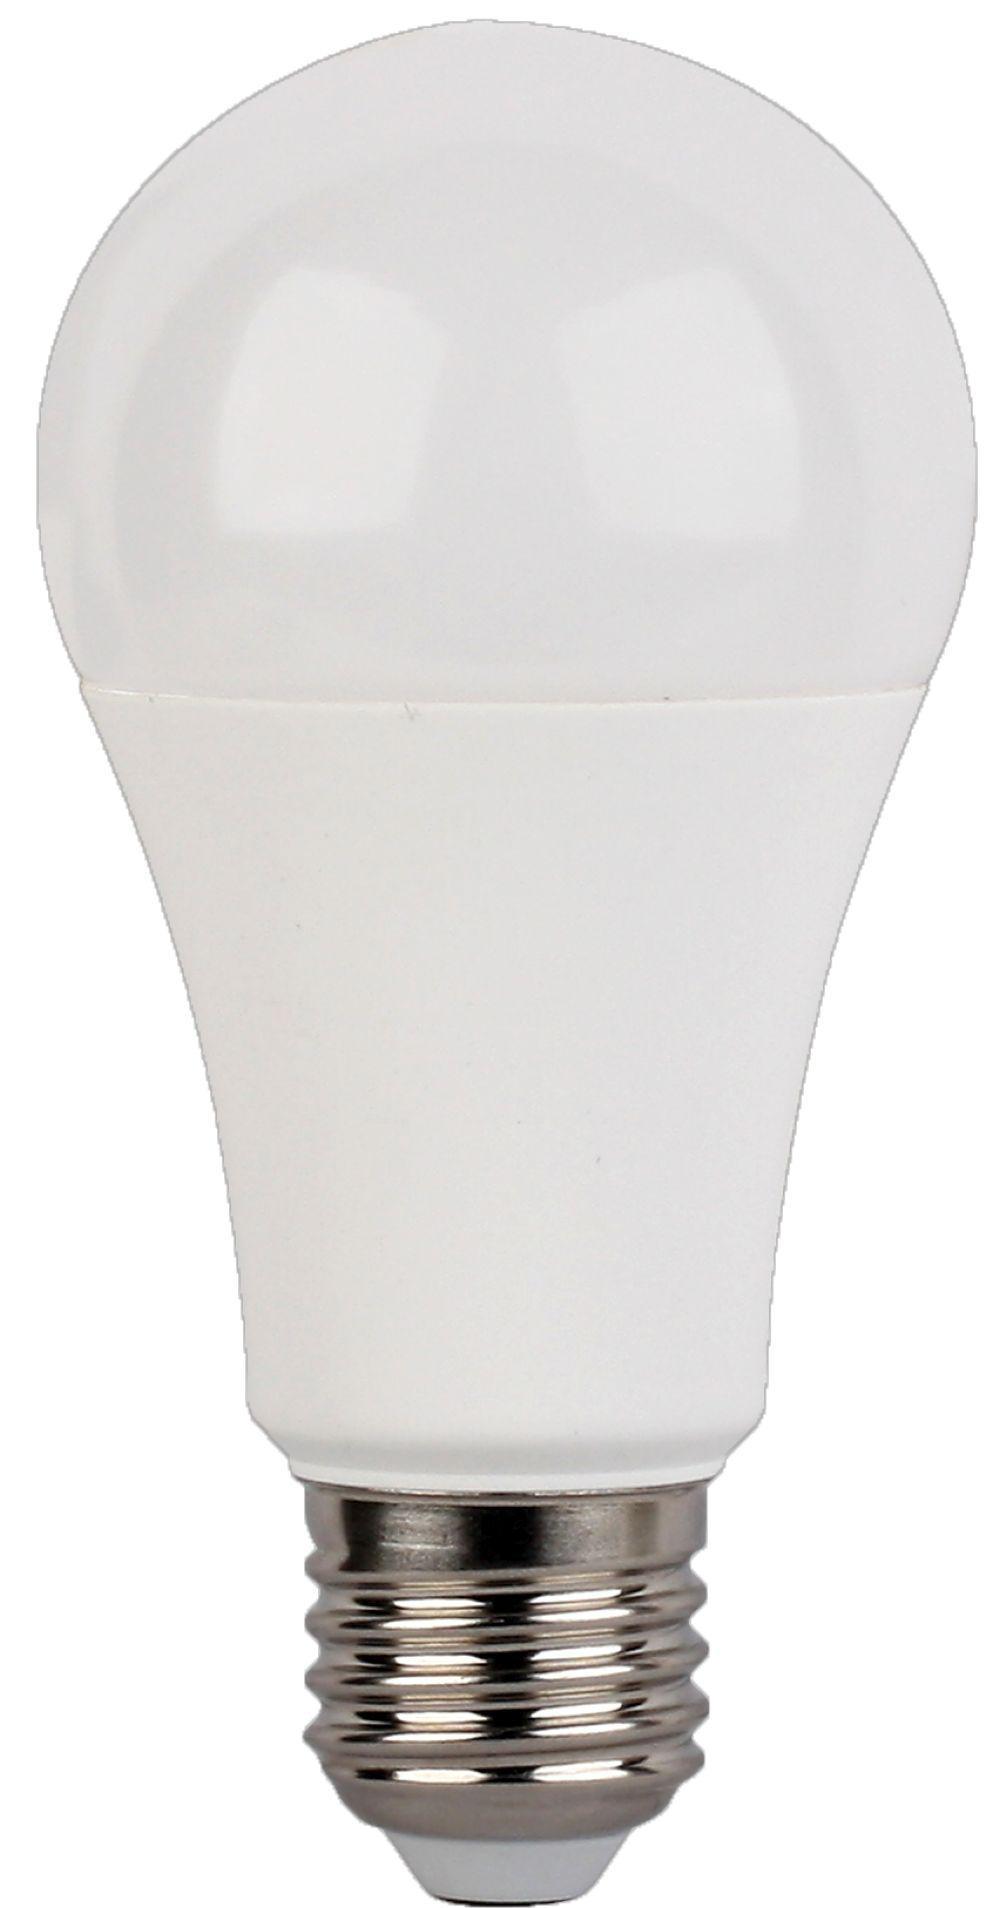 90121125 Лампа Premium светодионая E27 15 Вт груша 1350 Лм теплый свет STLM-0112327 ECOLA